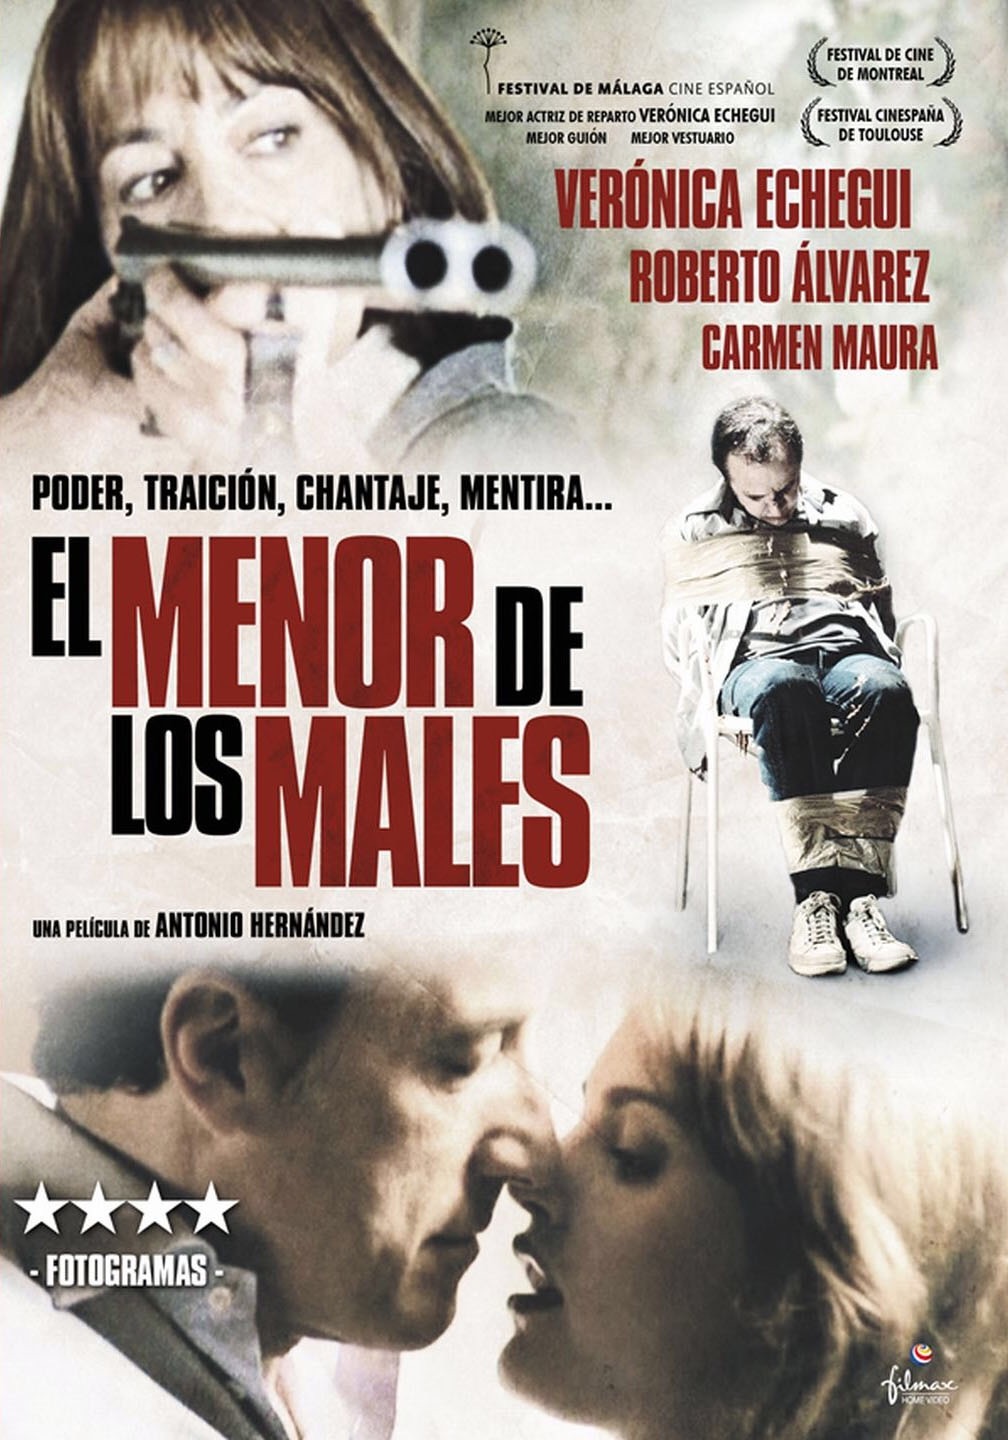 Verónica Echegui در صحنه فیلم سینمایی El menor de los males به همراه Carmen Maura و Roberto Álvarez